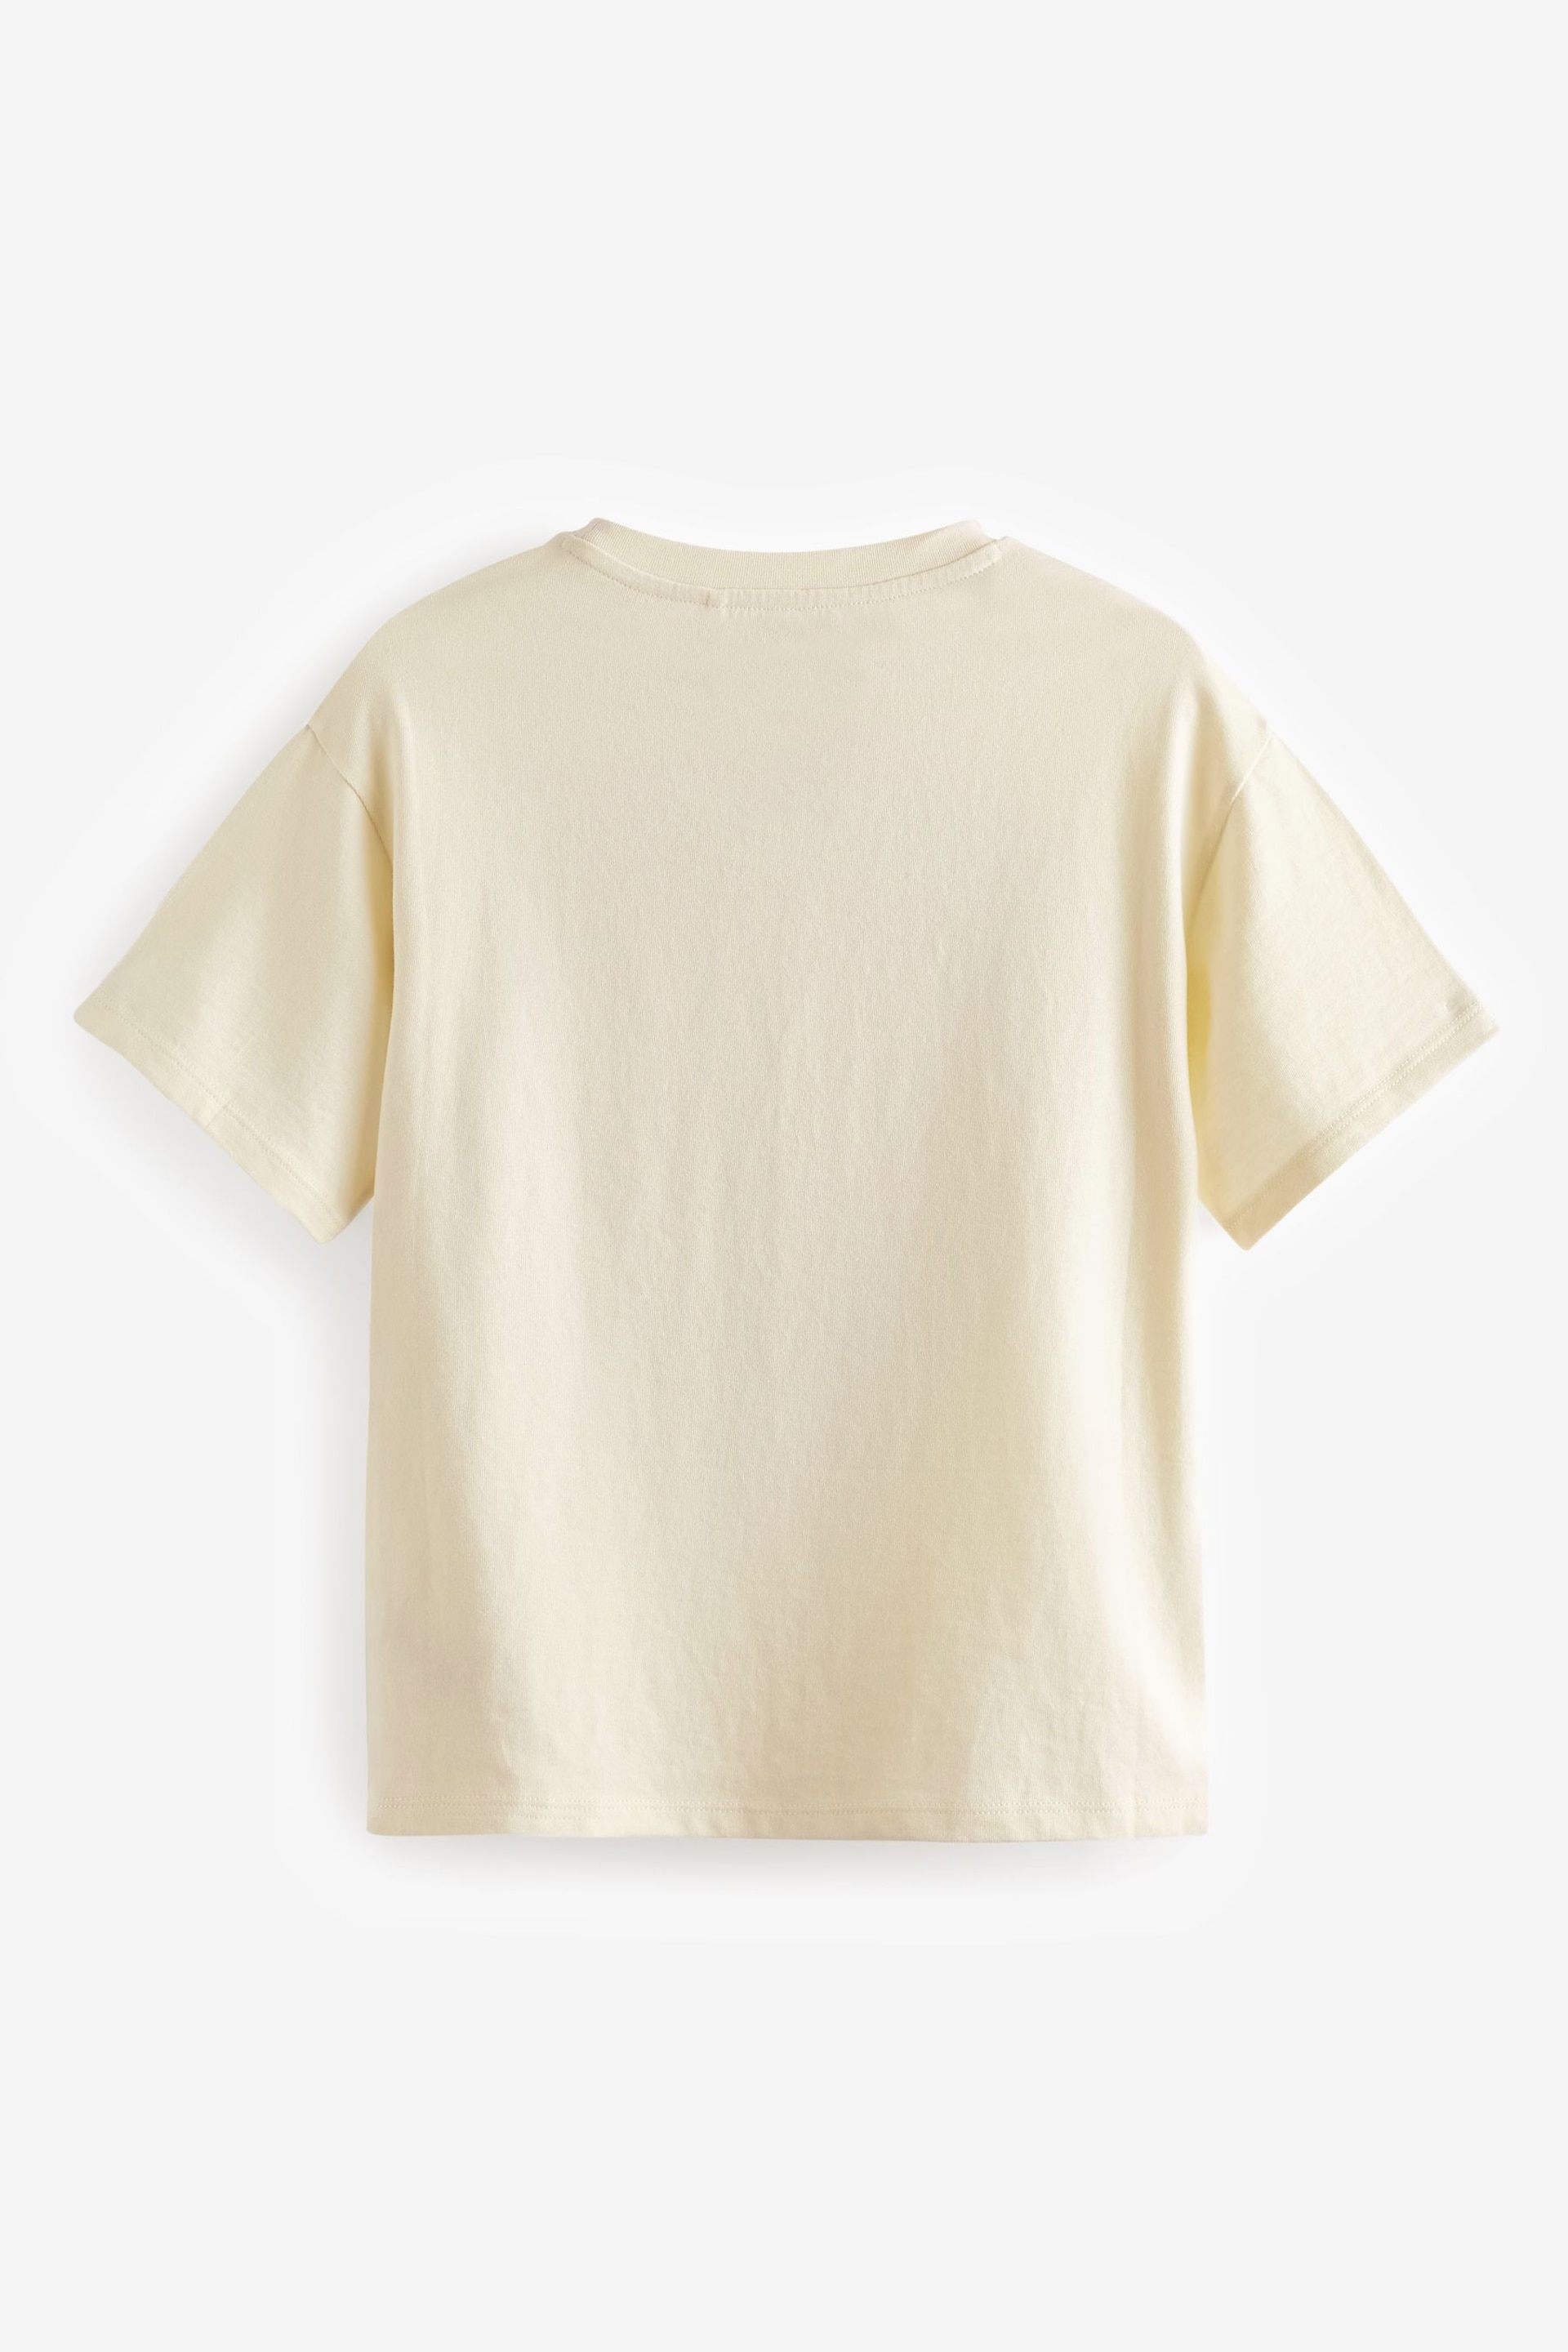 Lilo & Stitch Ecru Cream Oversized T-Shirt (3-16yrs) - Image 5 of 6